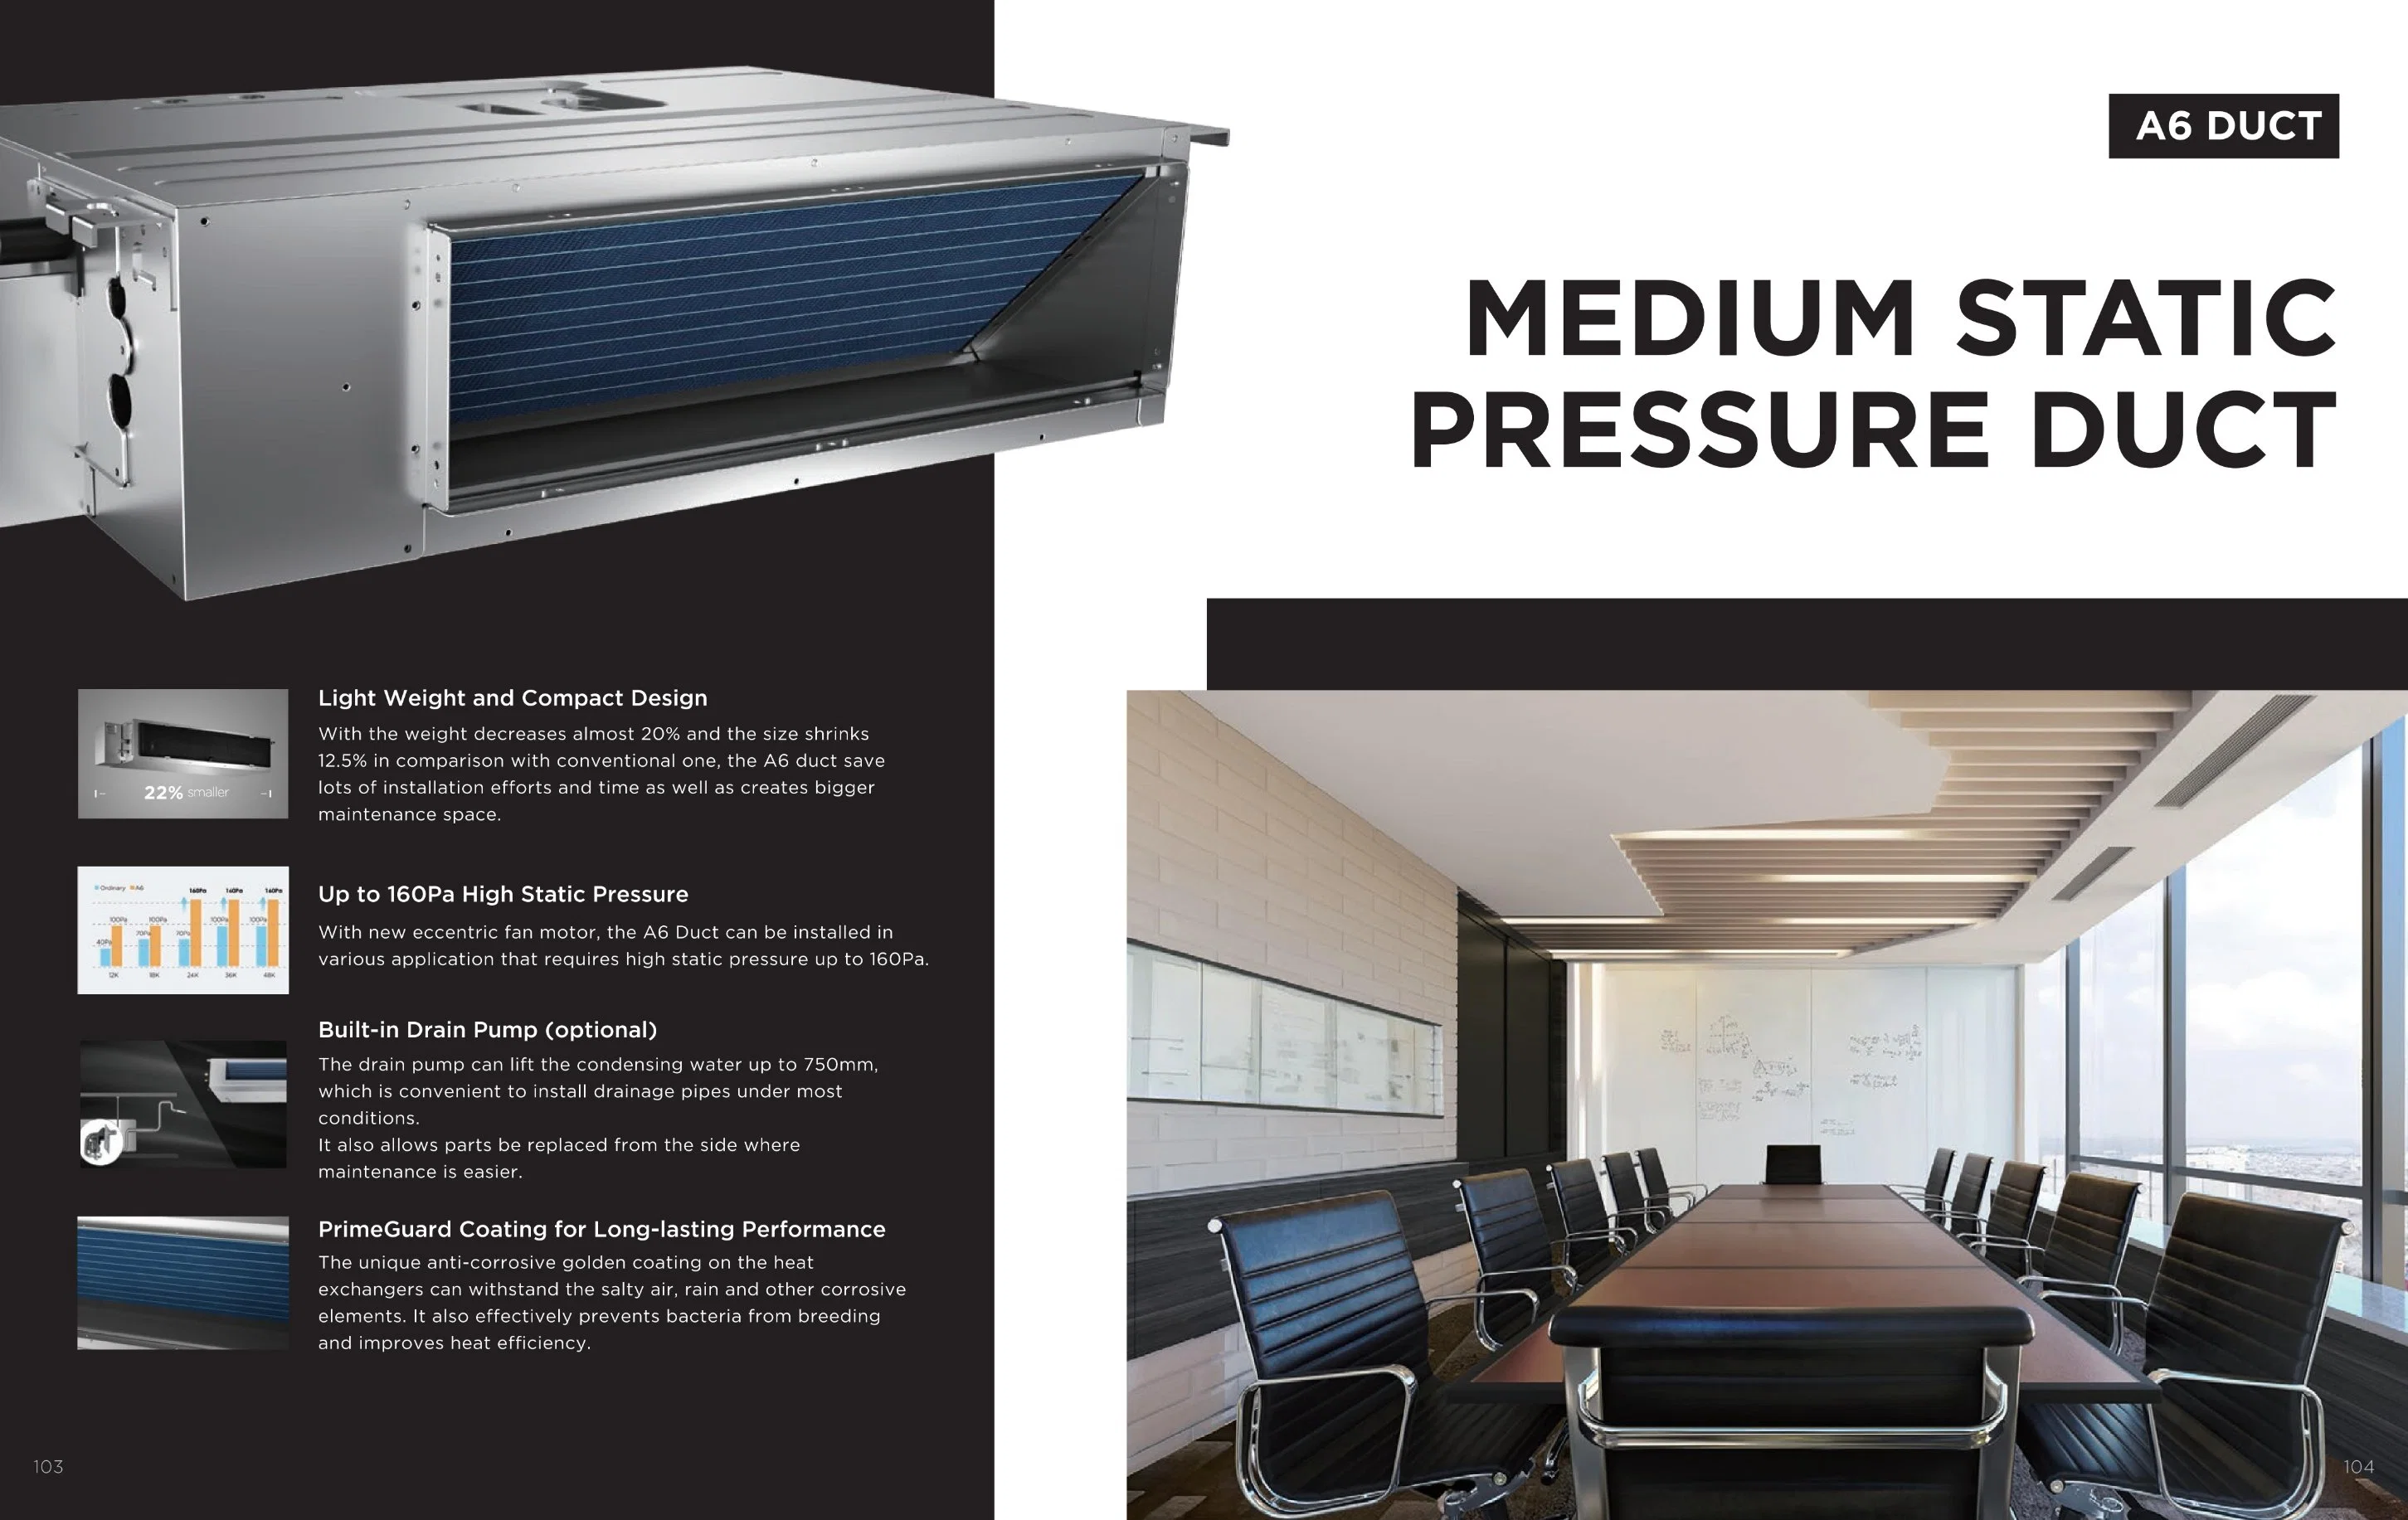 Midea Smart 24000BTU High Static Pressure Duct Multi Split Air Conditioner Vrf Vrv System for Small Food Stores